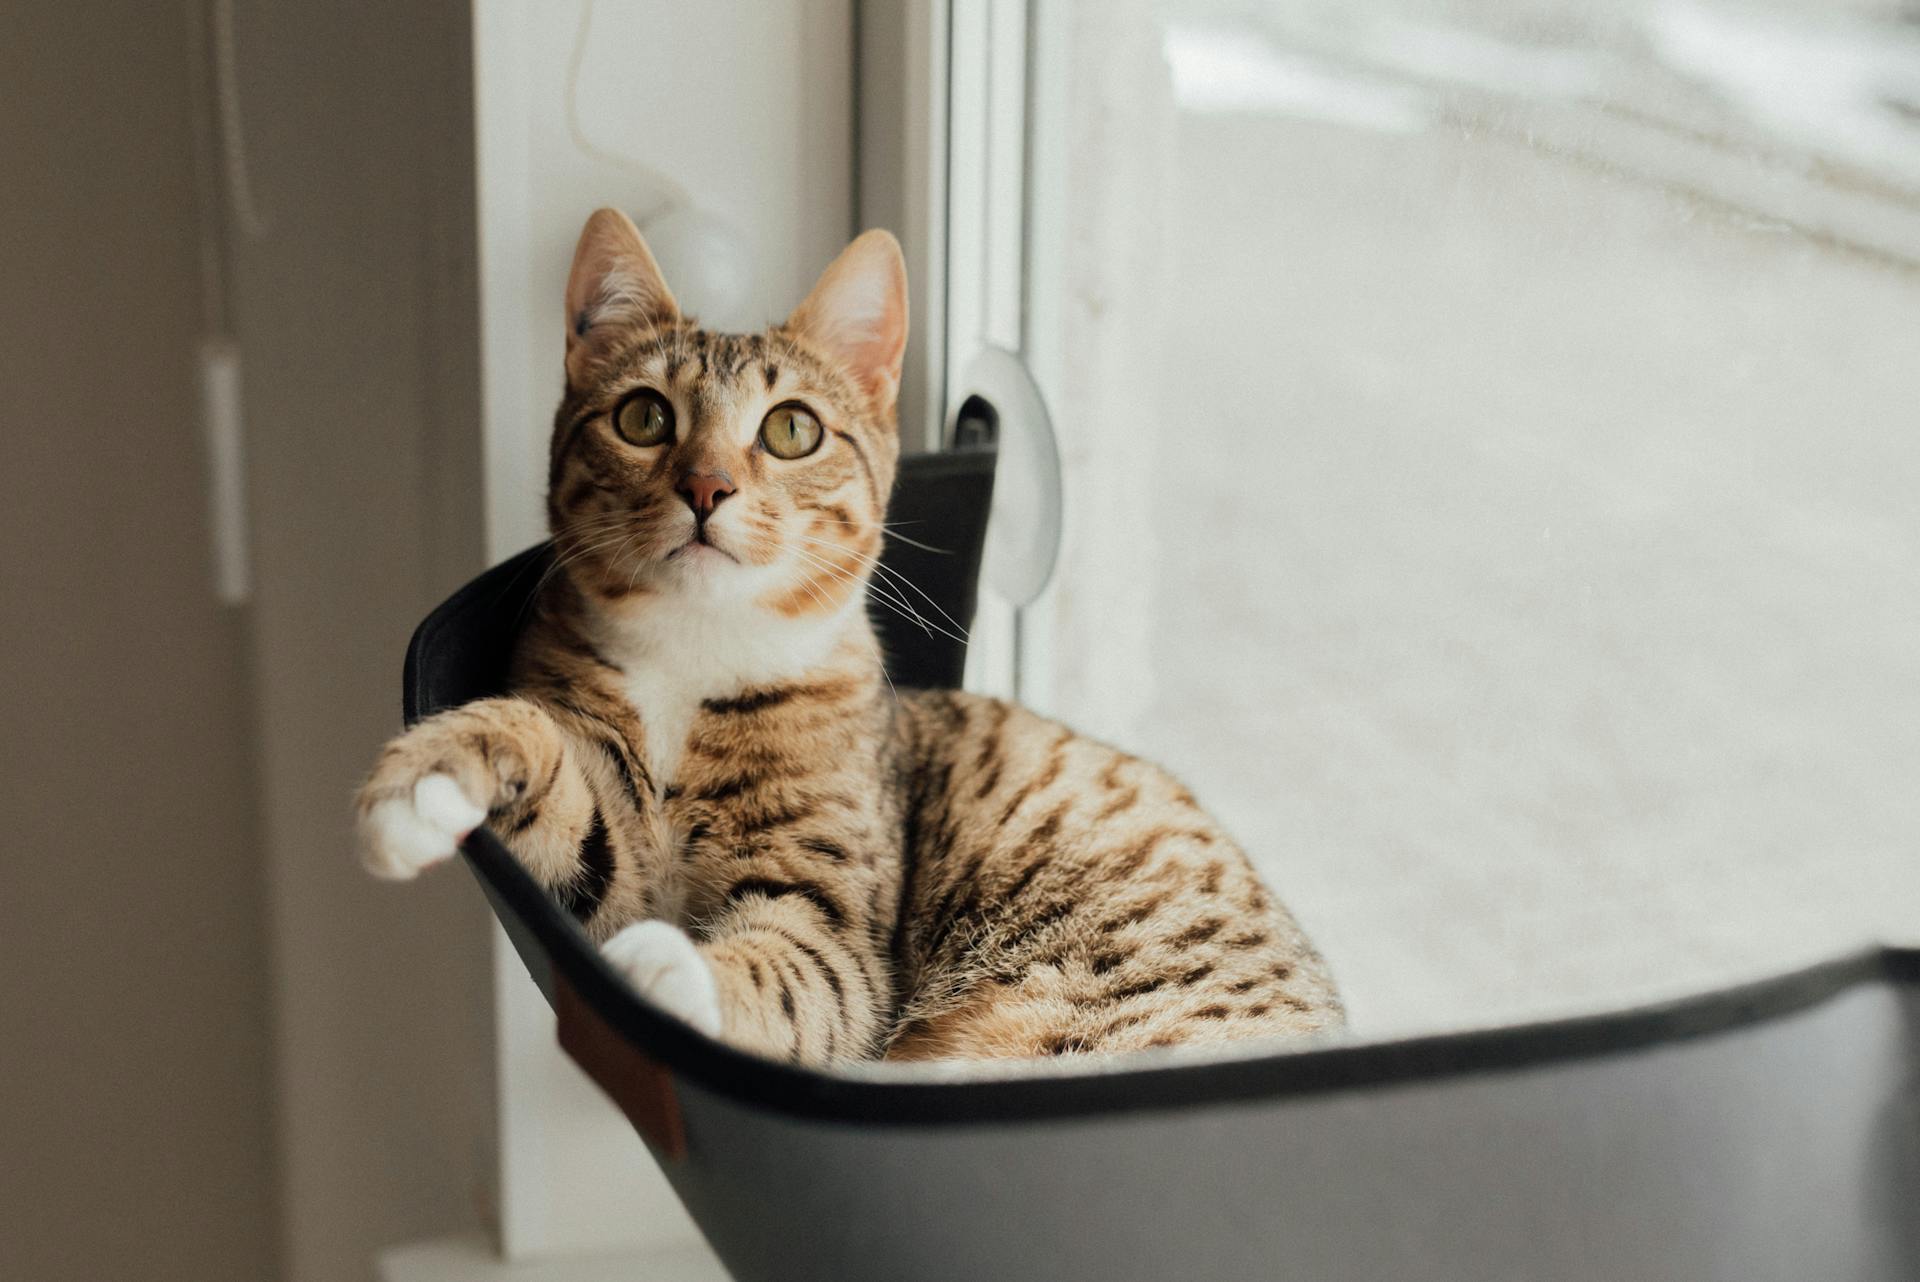 A cat sitting in a perch by a window